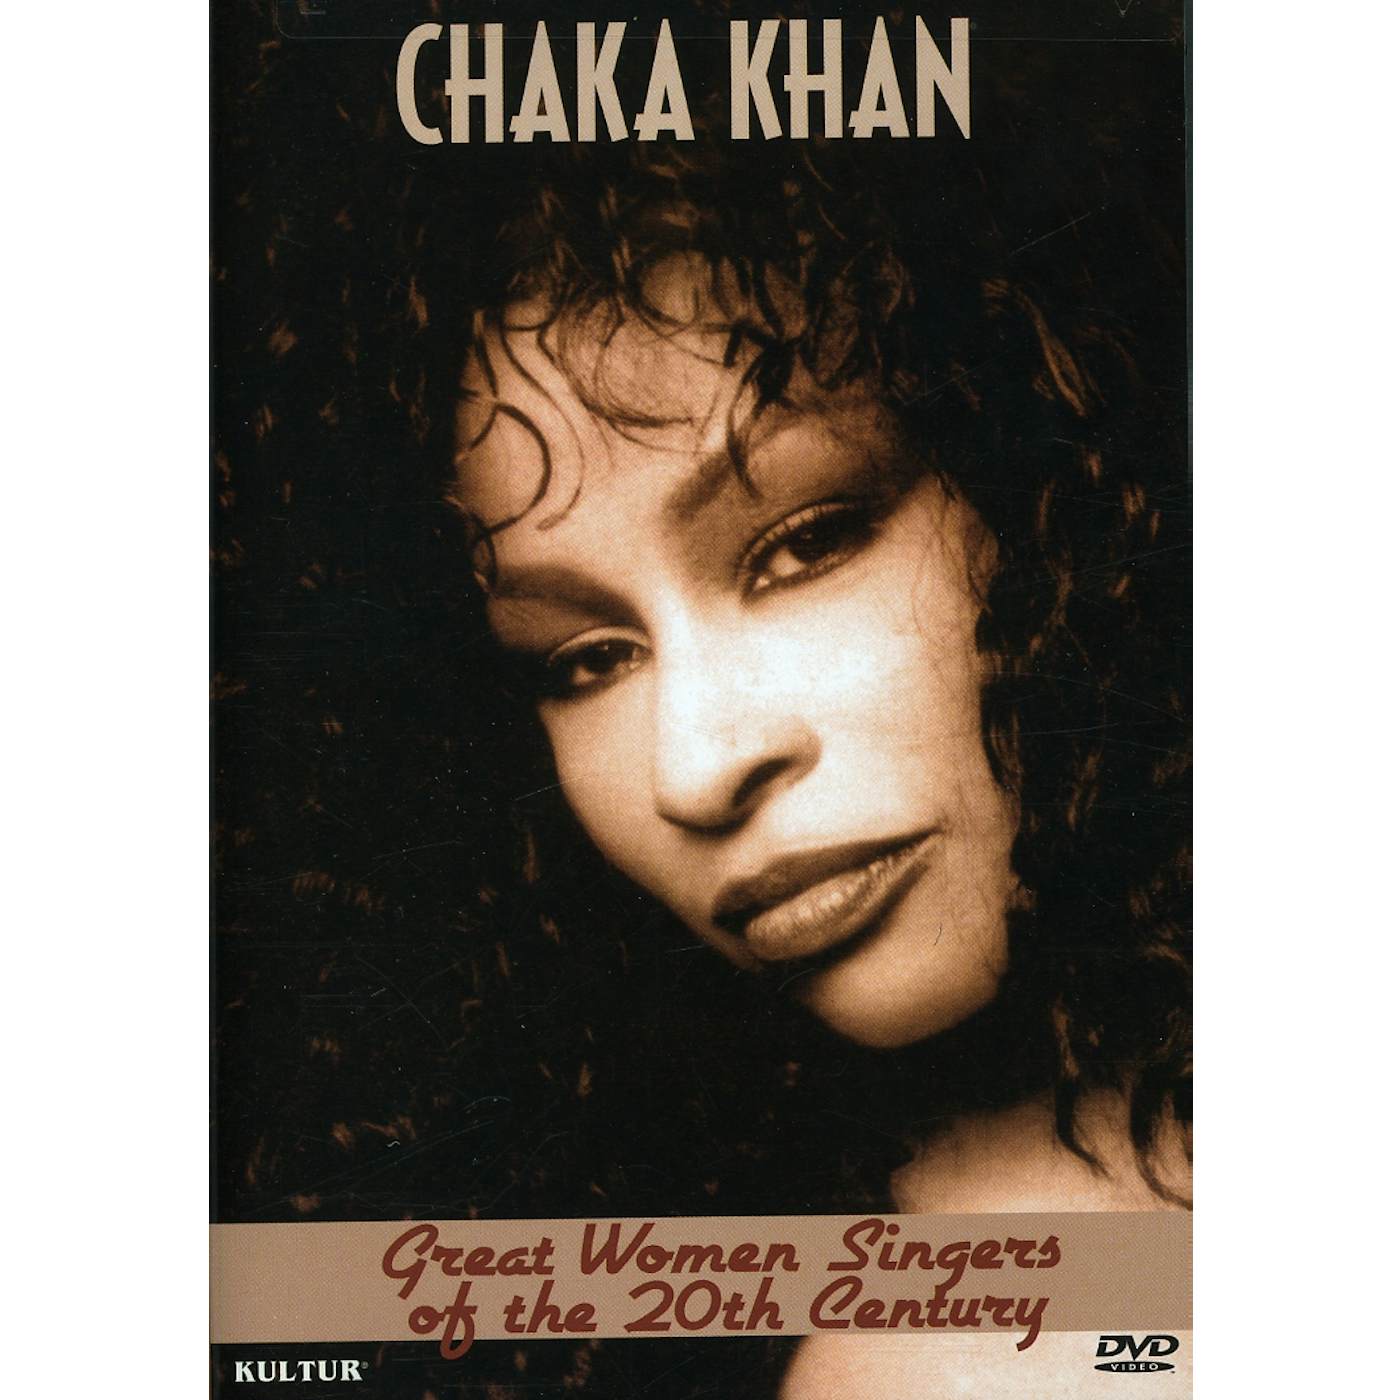 Chaka Khan GREAT WOMEN SINGERS OF THE 20TH CENTURY DVD